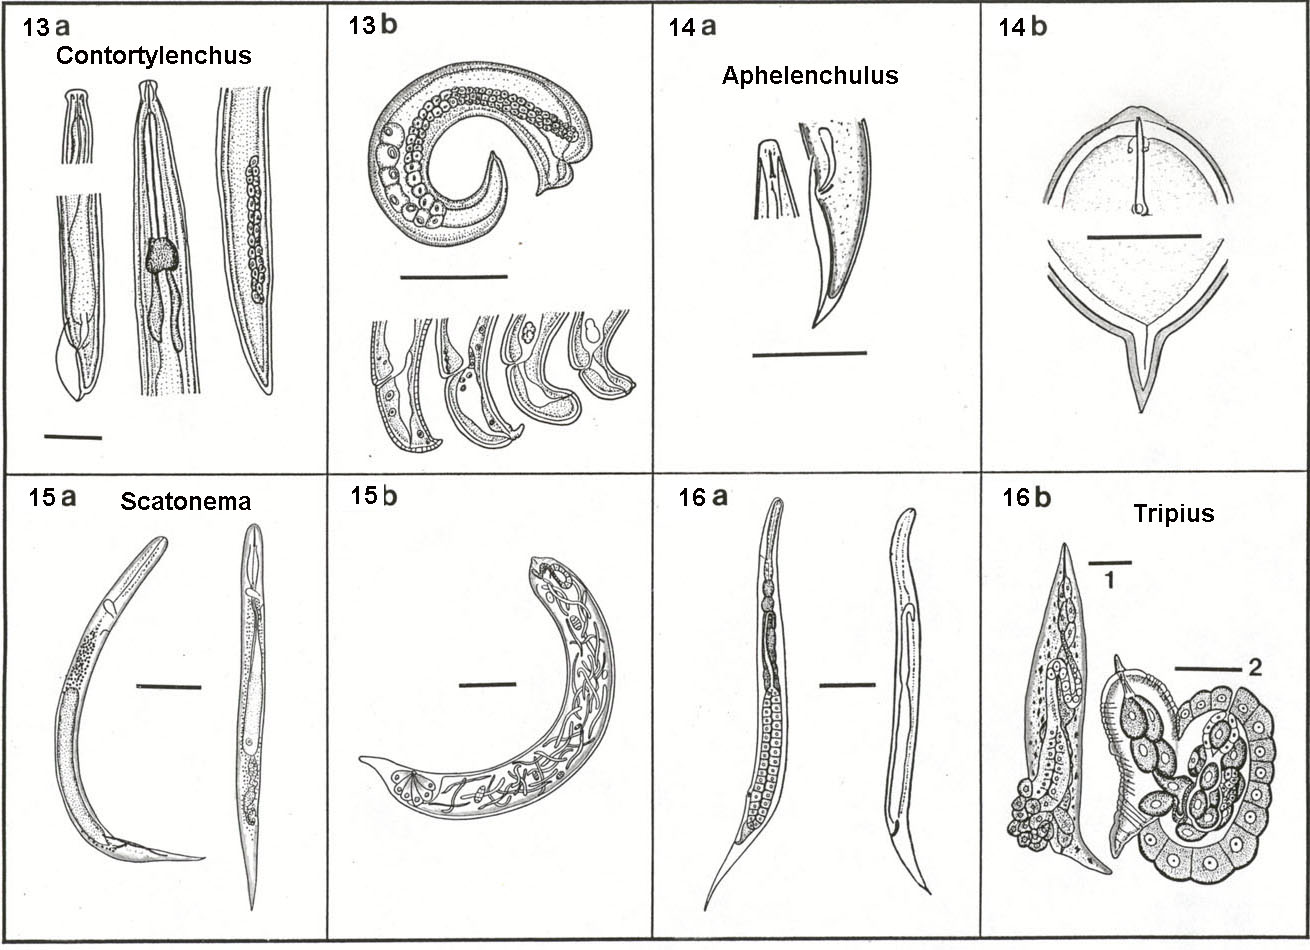 What are types of nematodes?